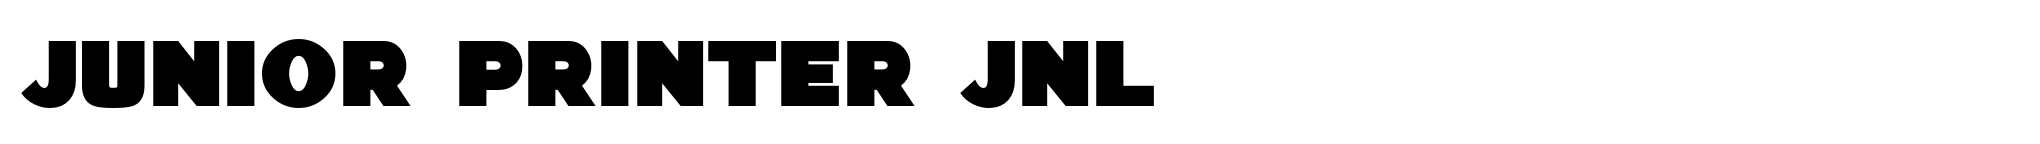 Junior Printer JNL image